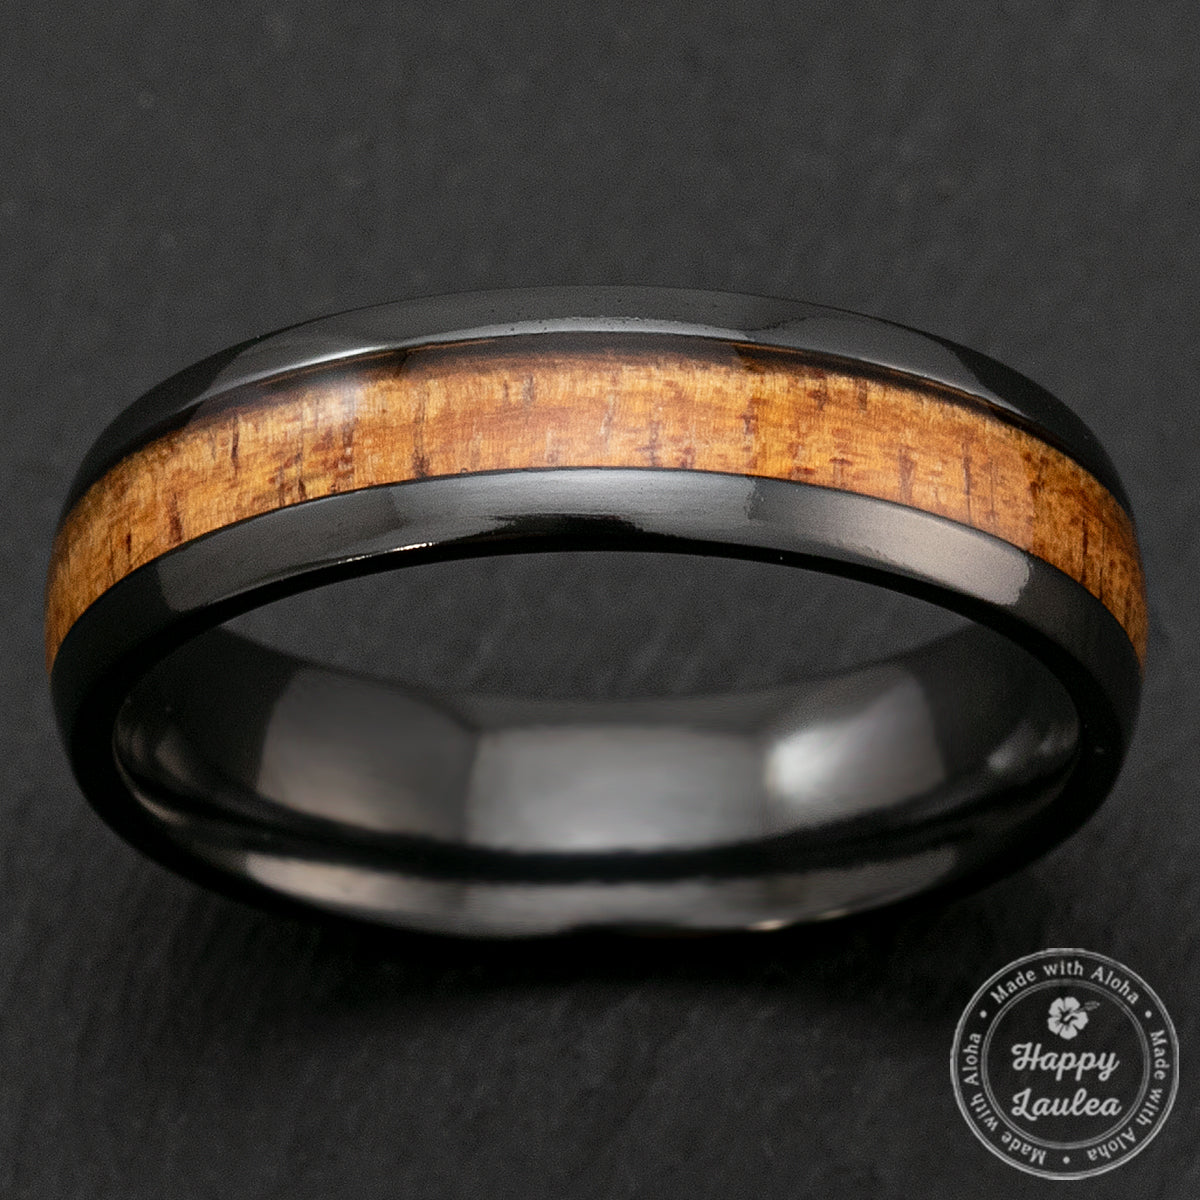 Black Zirconium 6mm Ring with Hawaiian Koa Wood Inlay - Dome Shape, Comfort Fitment